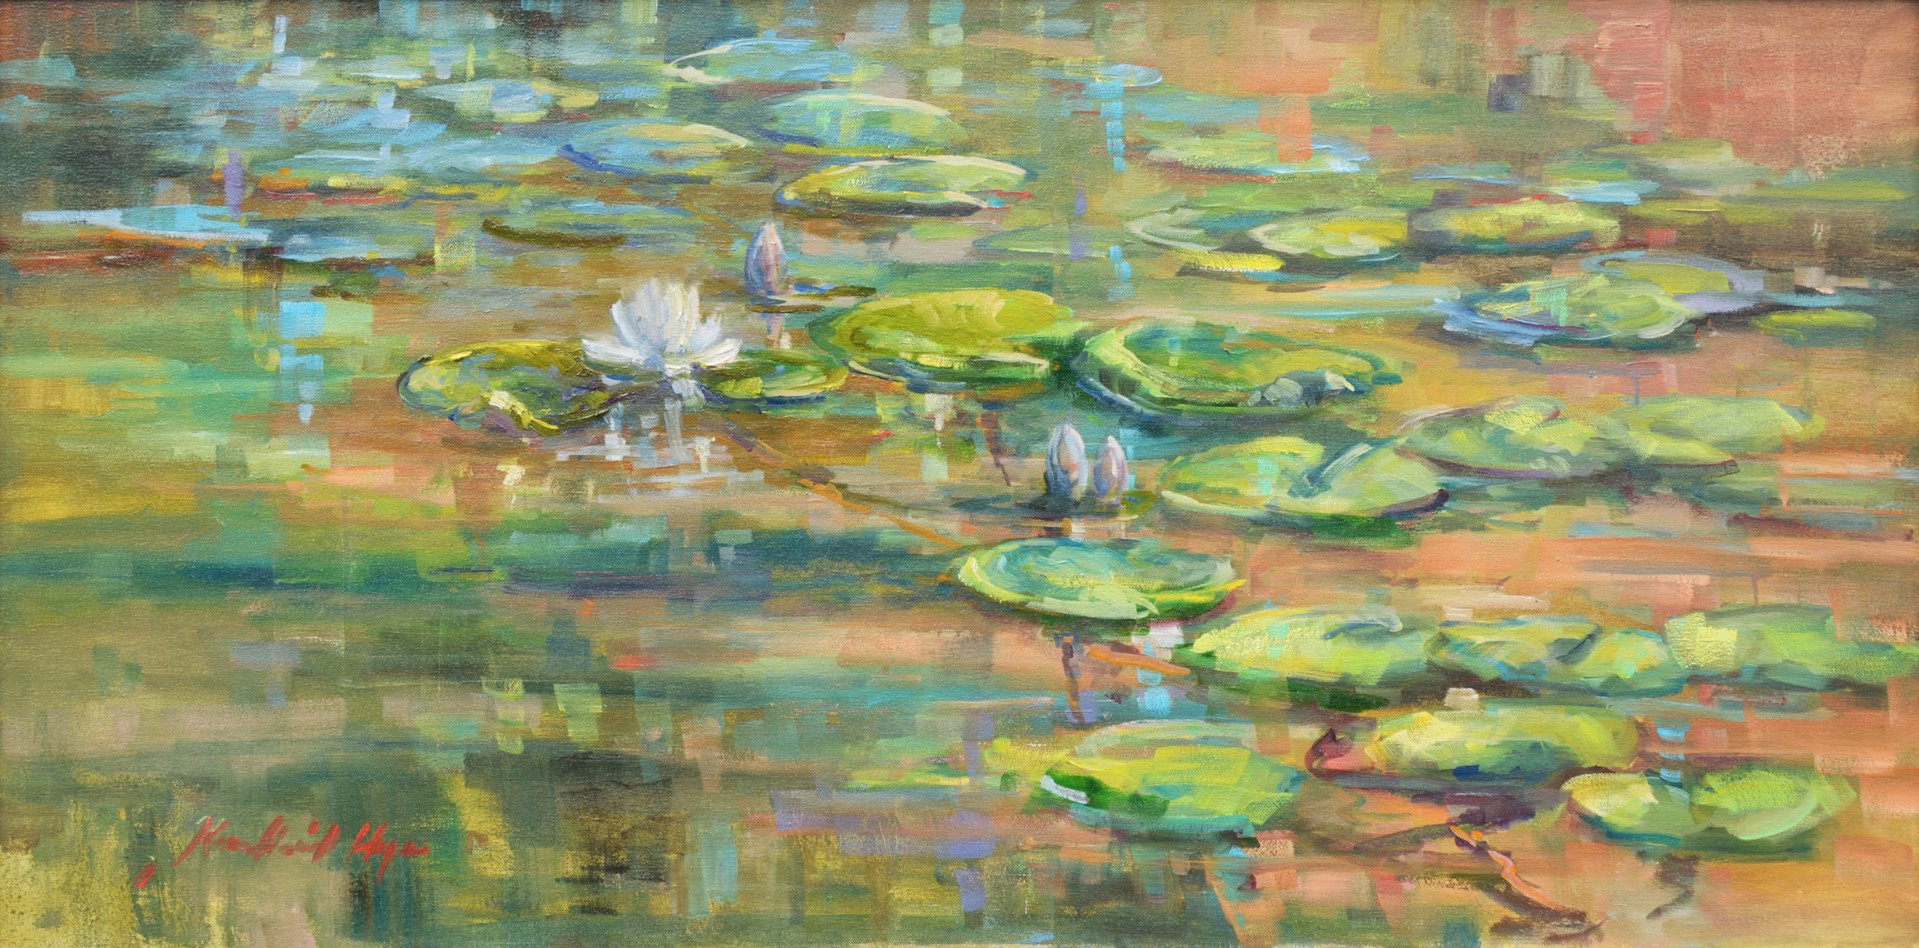 Water Lilies in the Morning by Karen Hewitt Hagan